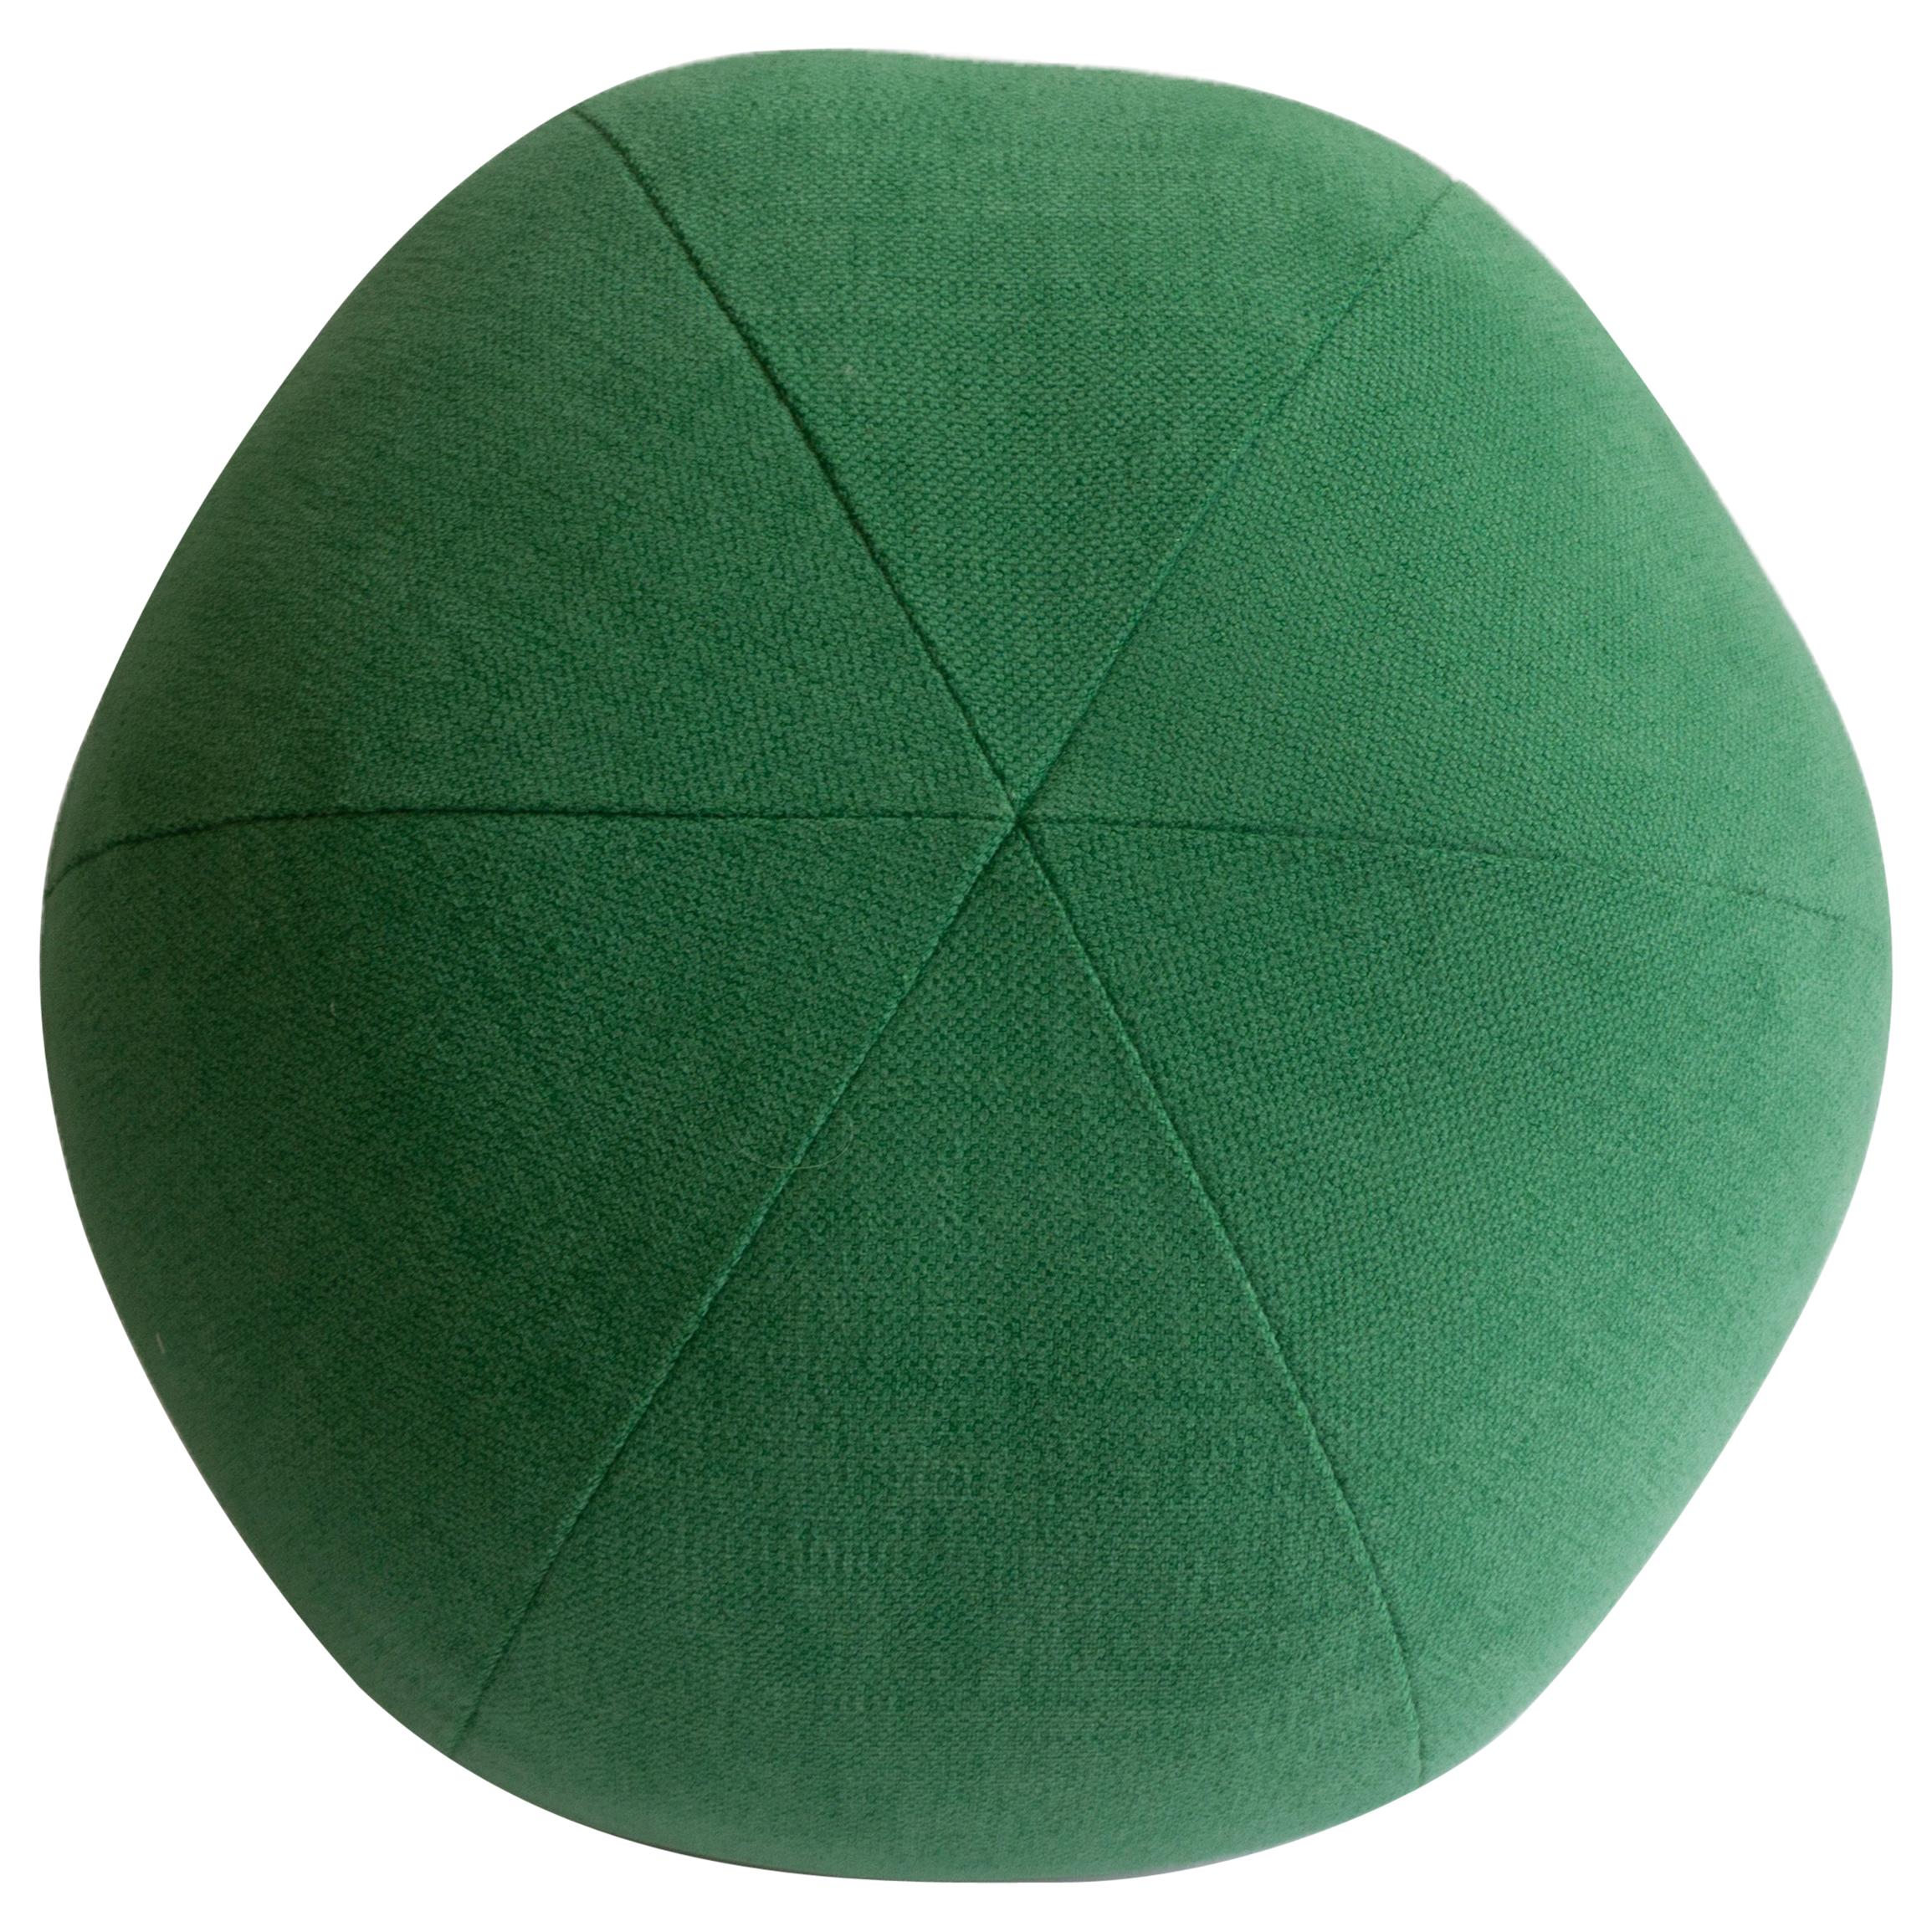 Green Round Ball Throw Pillow